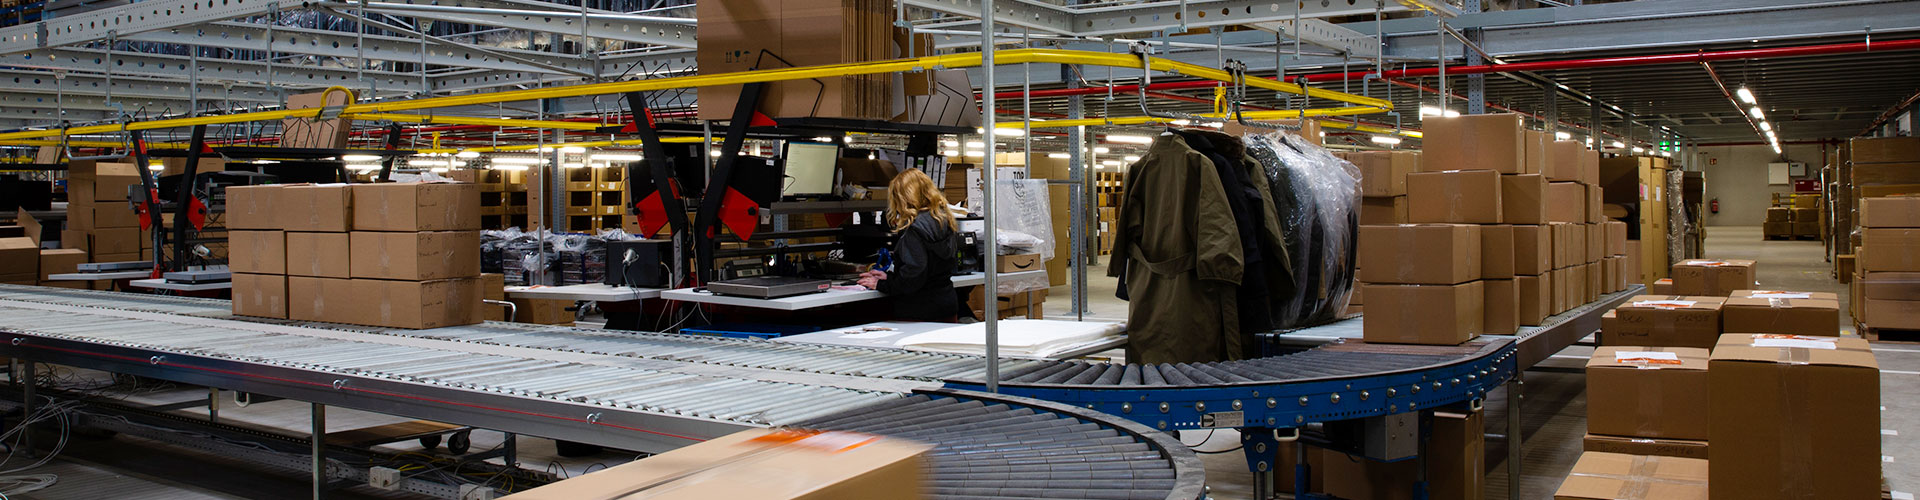 Logistics warehouse for clothes | LGI